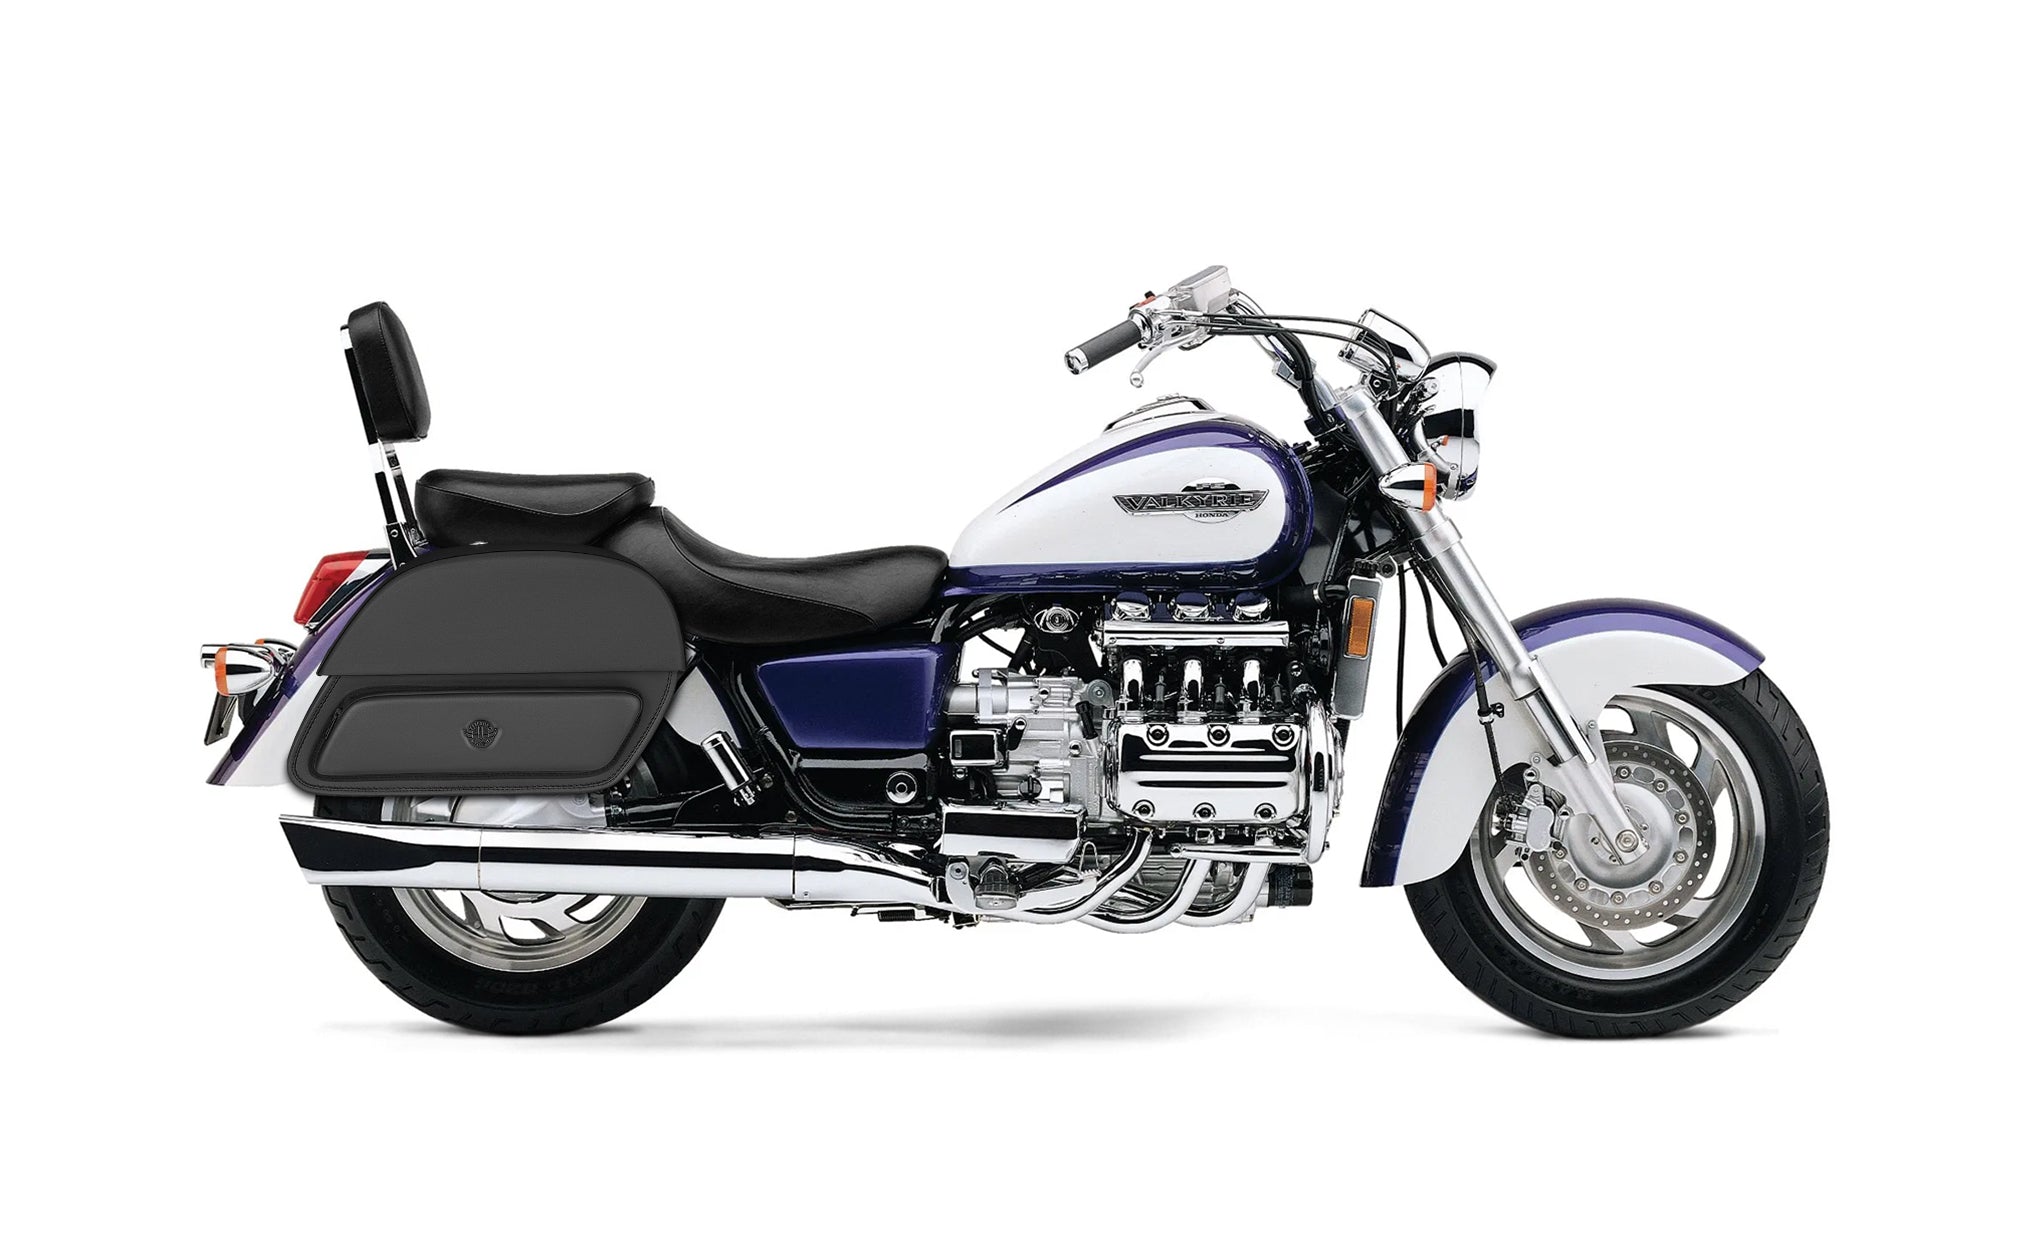 28L - Pantheon Medium Honda Valkyrie 1500 Interstate Motorcycle Saddlebags on Bike Photo @expand